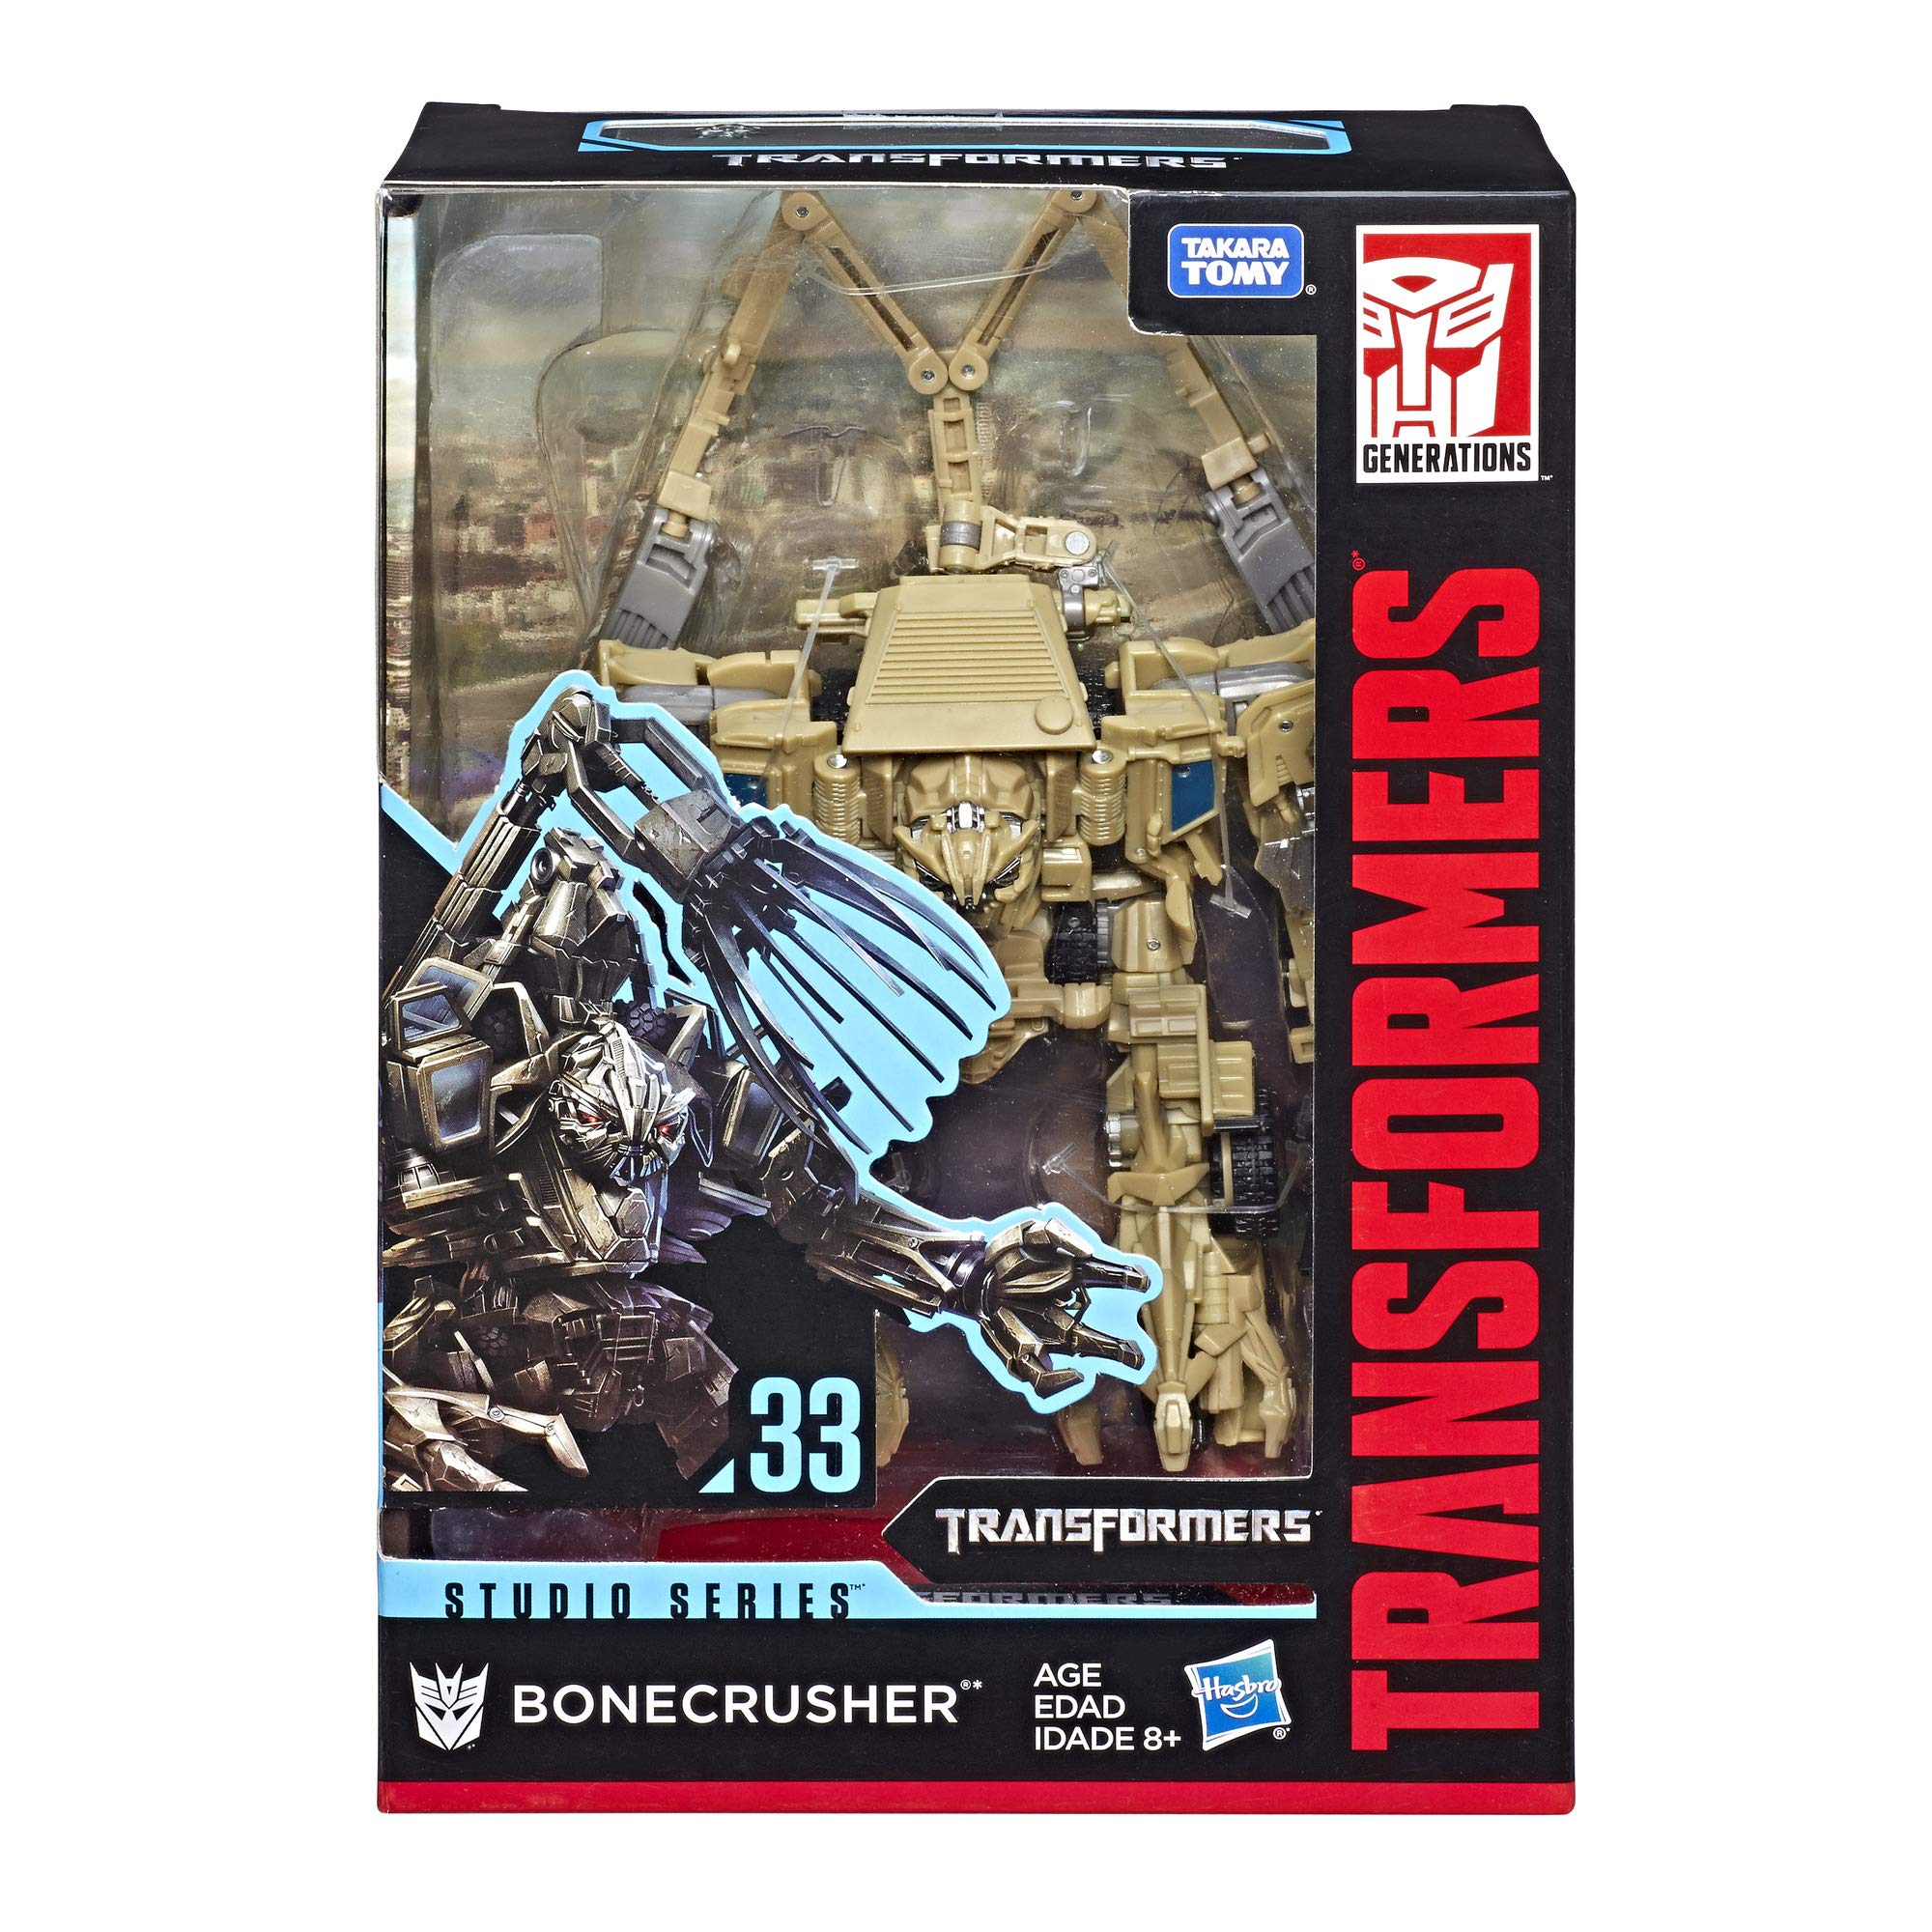 Transformers Studio Series Number 33 Voyager Class Bonecrusher